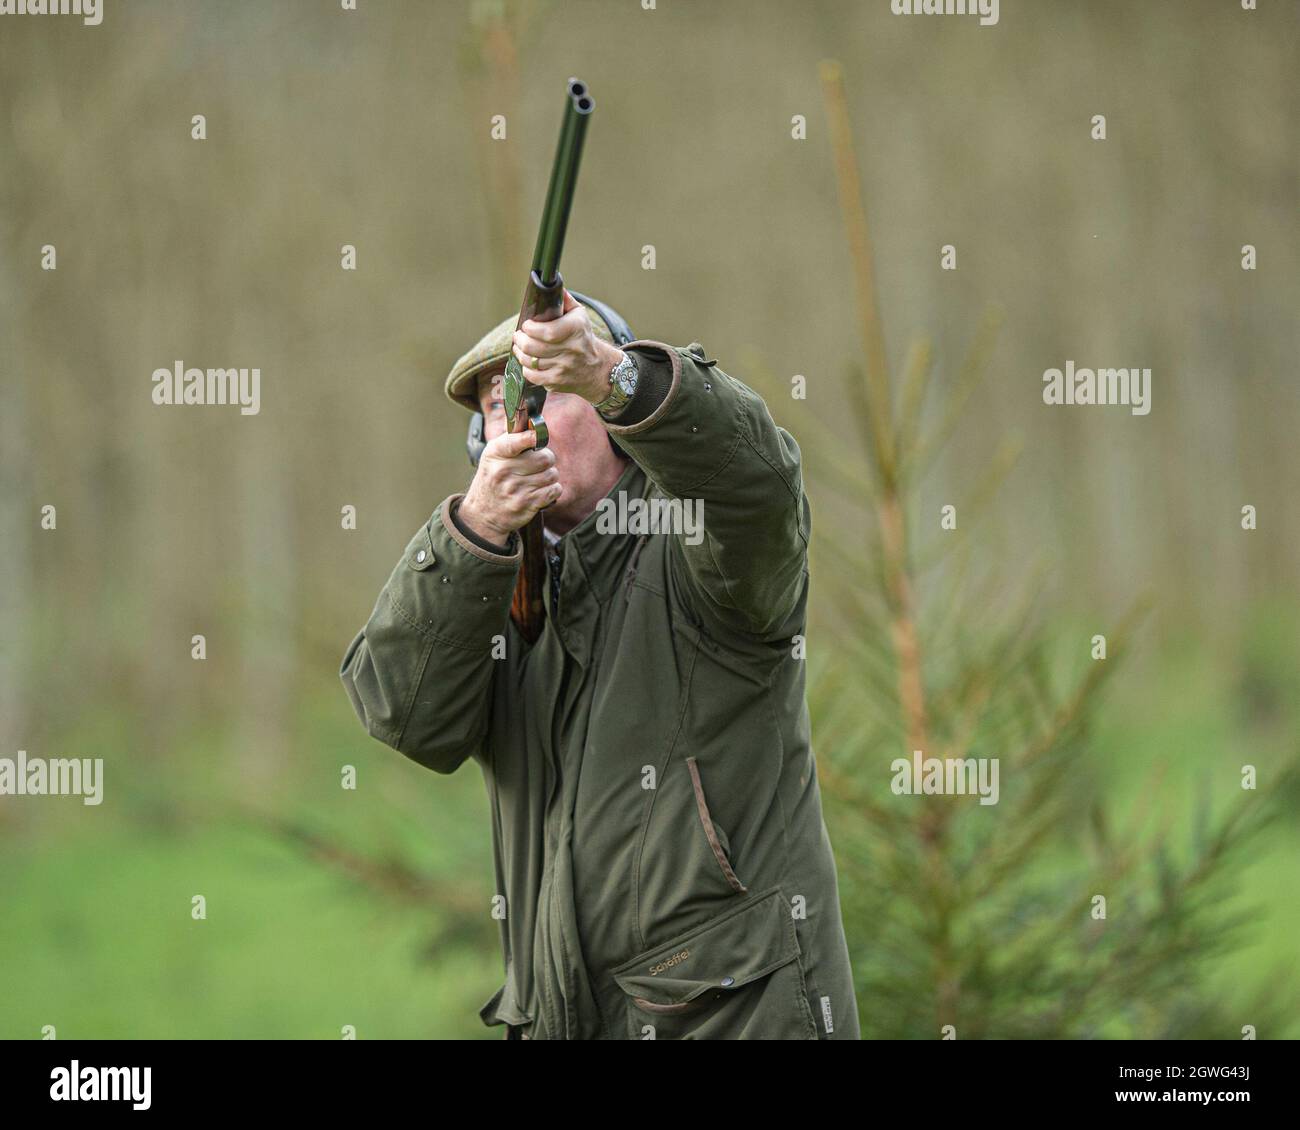 man shooting pheasants with shotgun Stock Photo